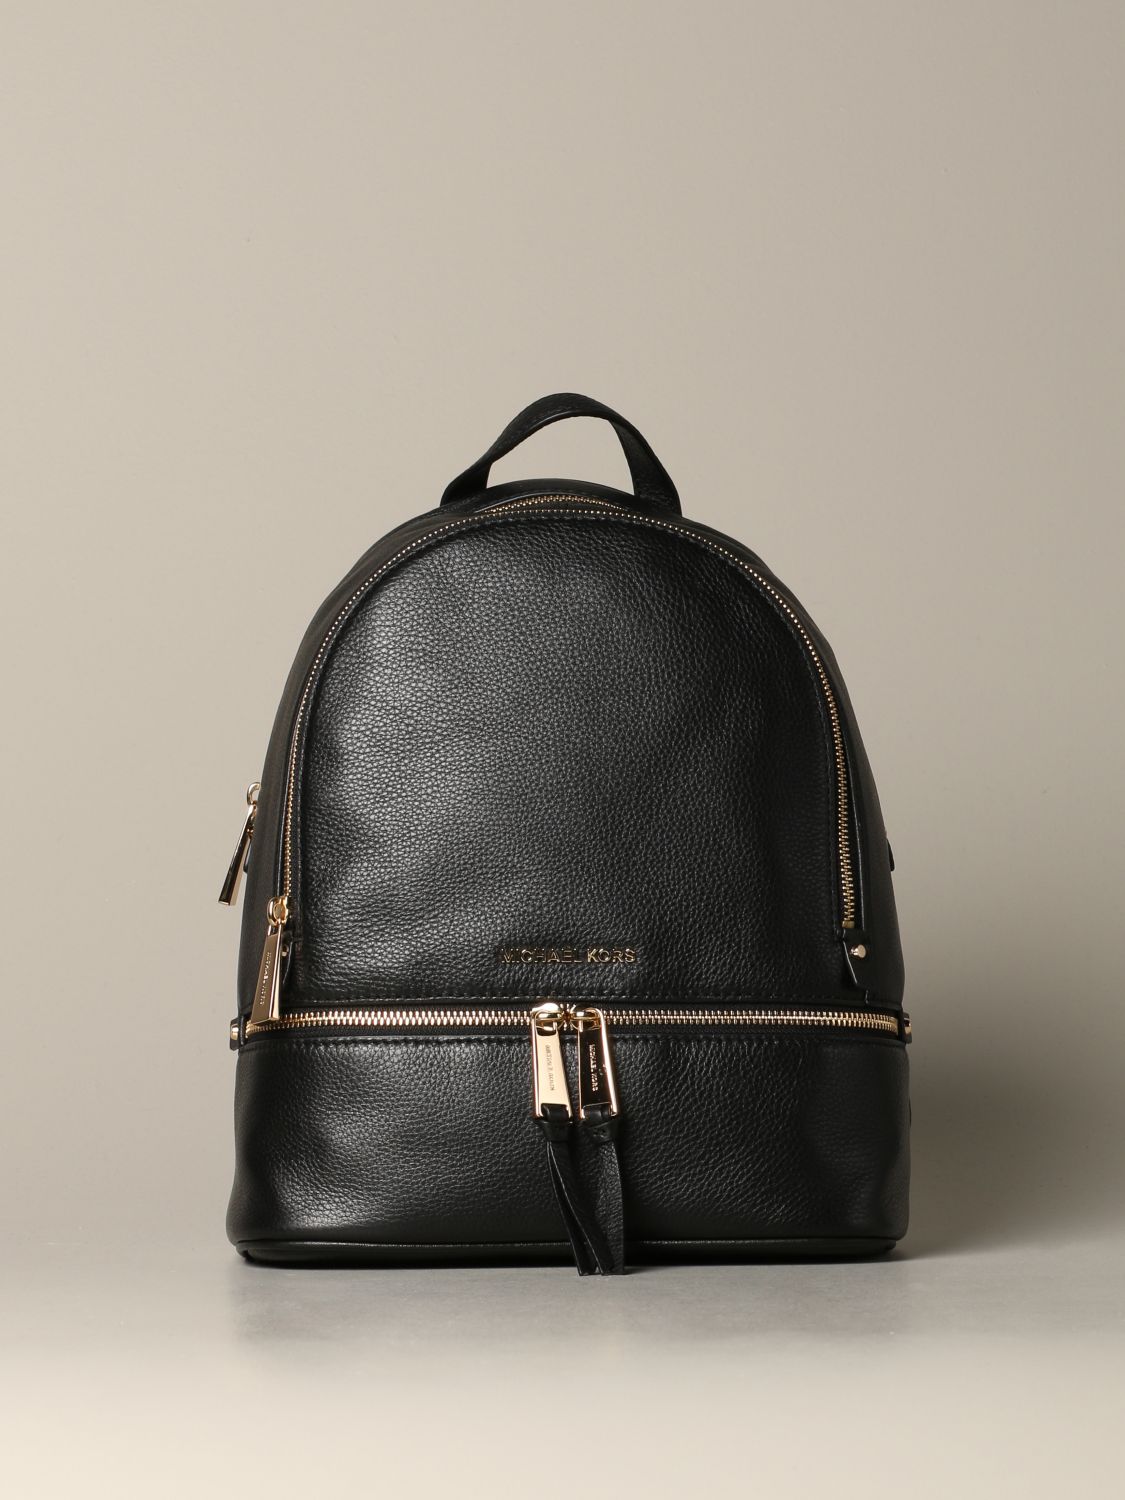 Michael Kors Outlet: Michael Rhea Zip backpack in textured leather - Black  | Michael Kors backpack 30S5GEZB1L online on 